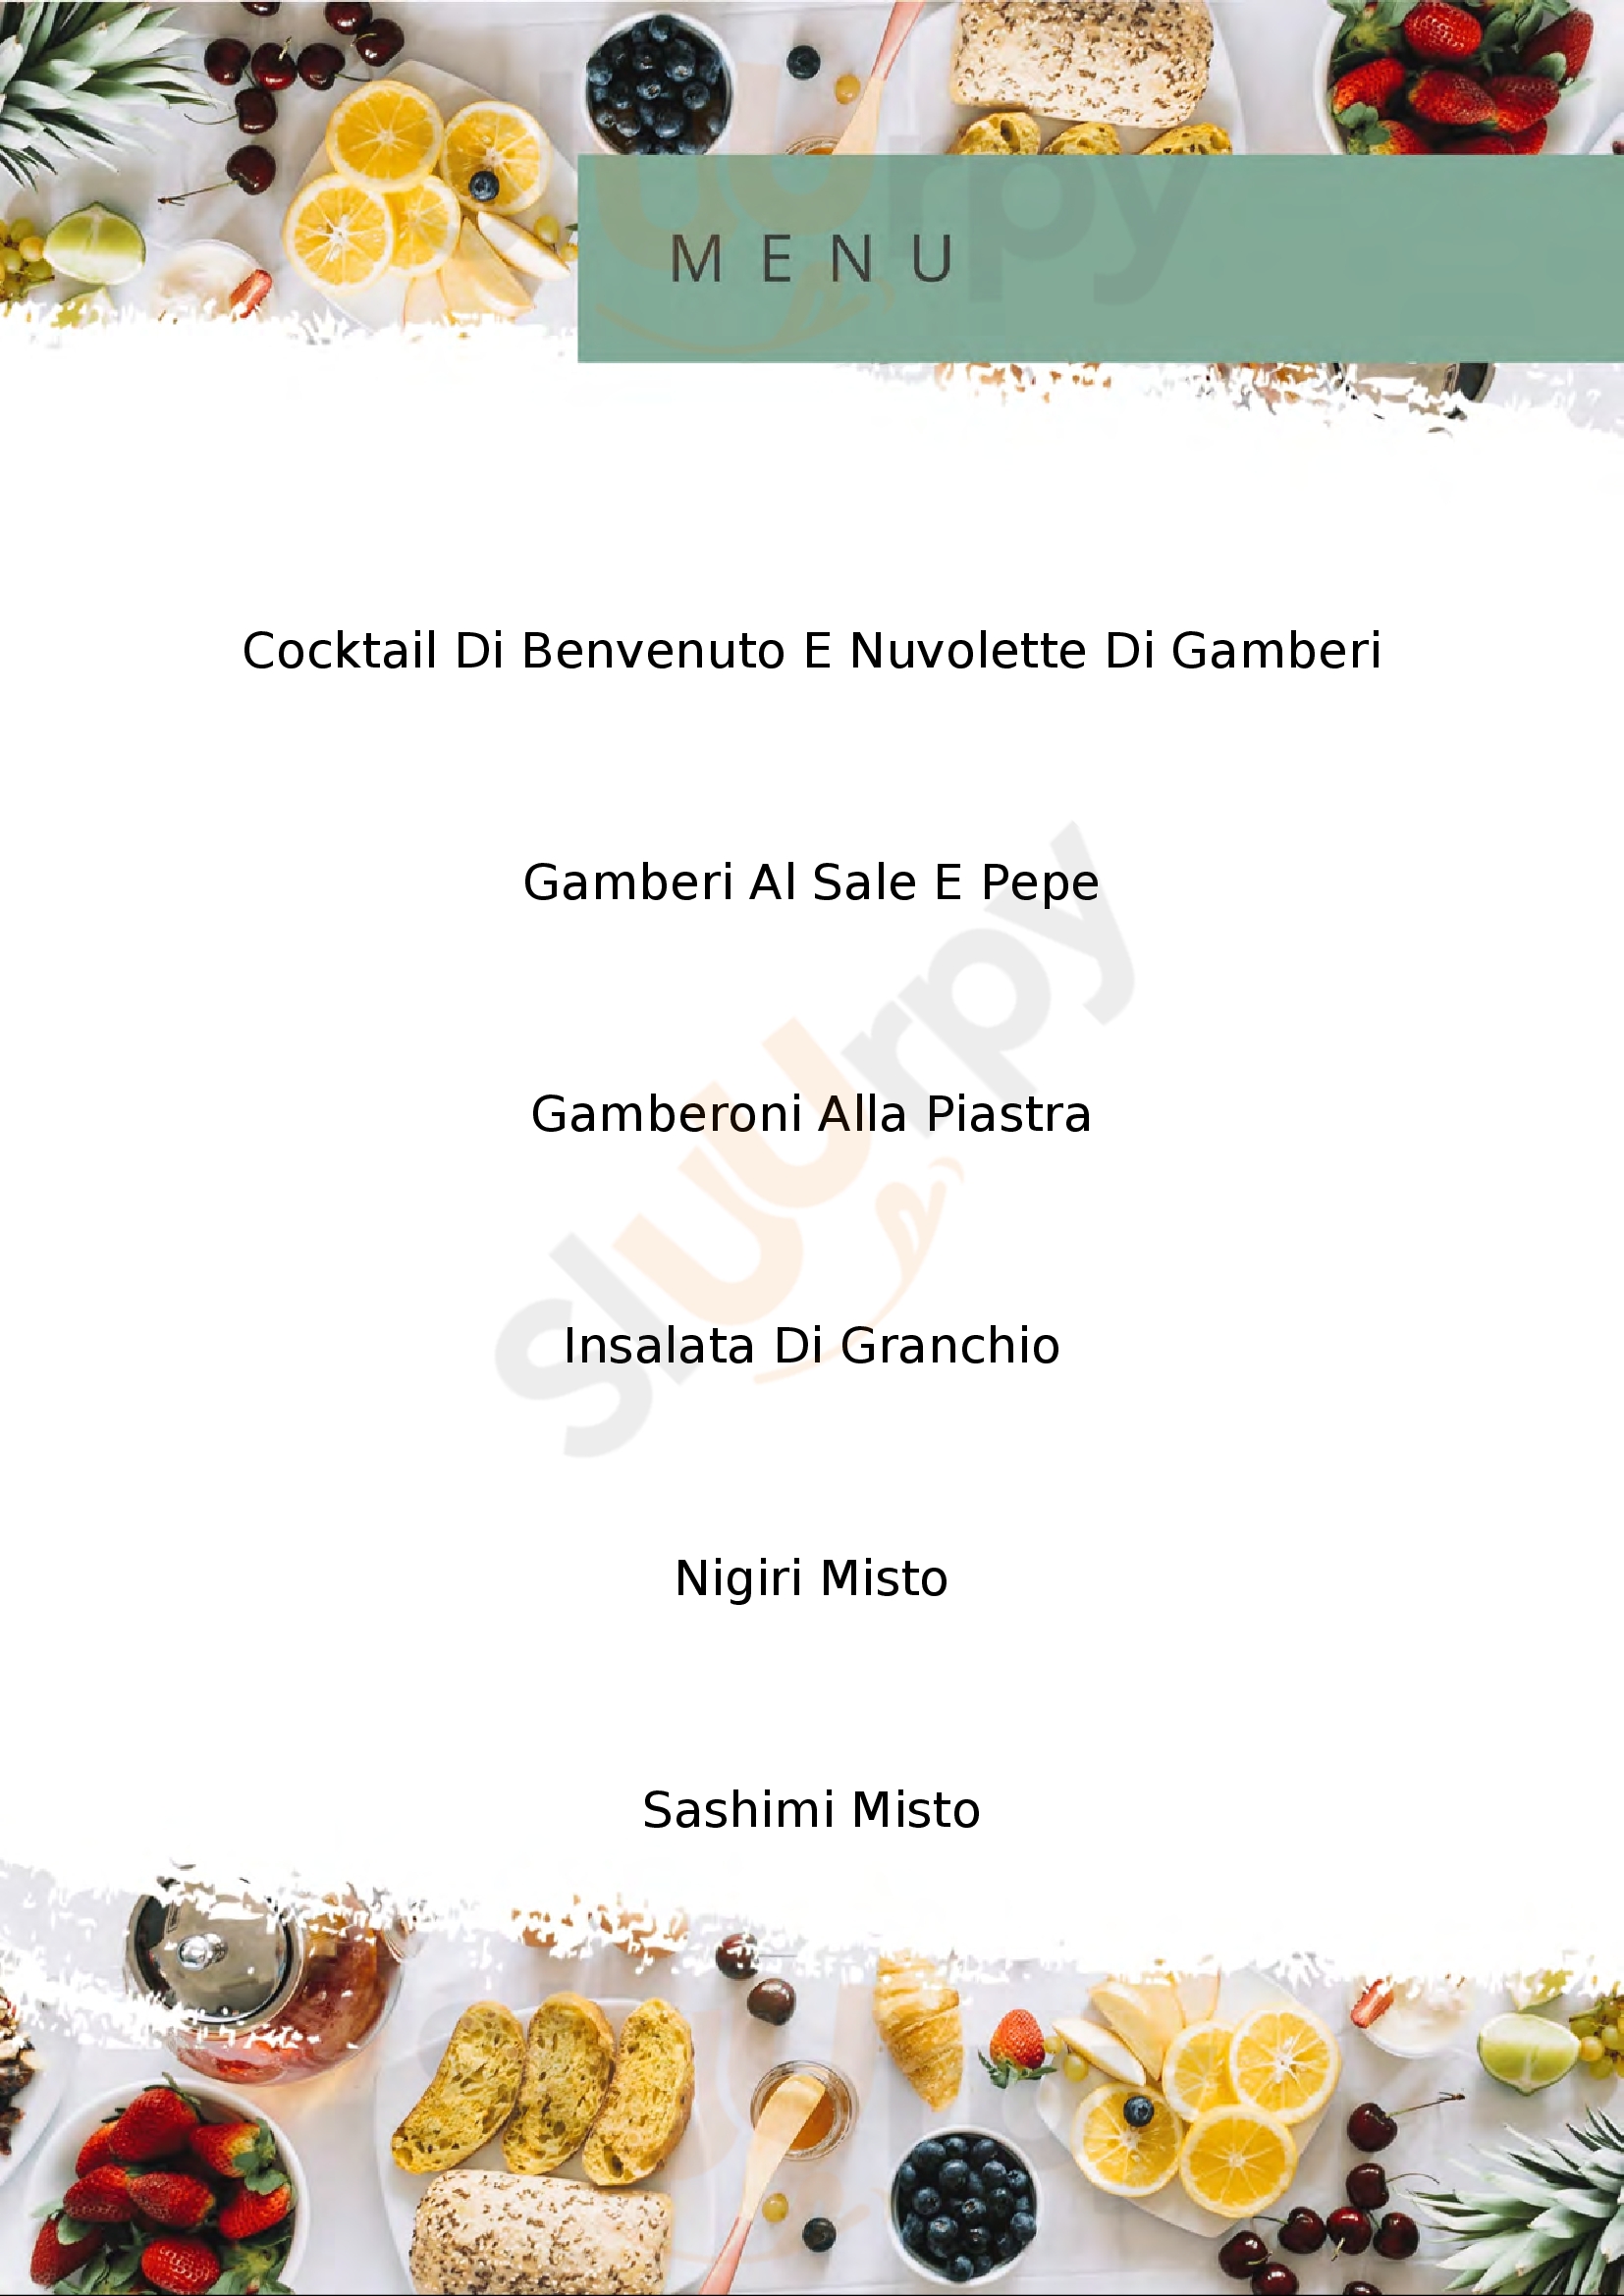 Ikuzo Sushi Piacenza menù 1 pagina